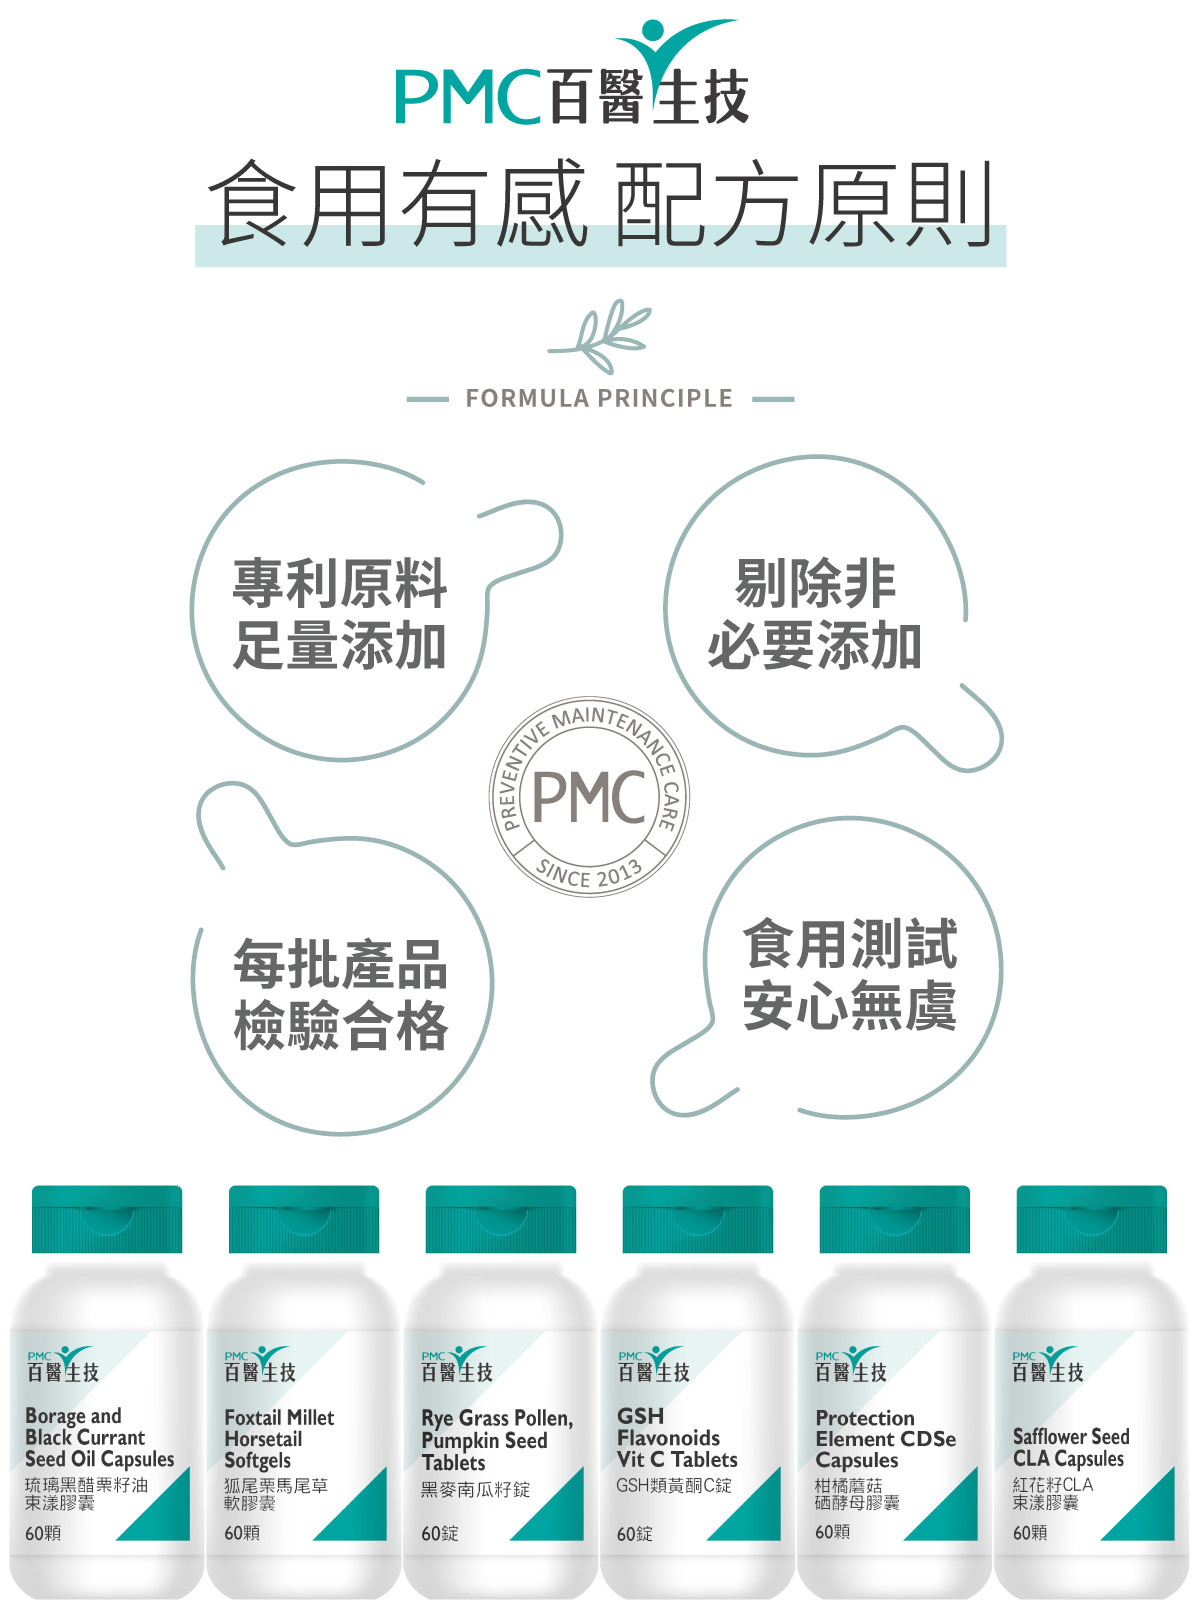 about PMC Nutritional supplements Formulation principle